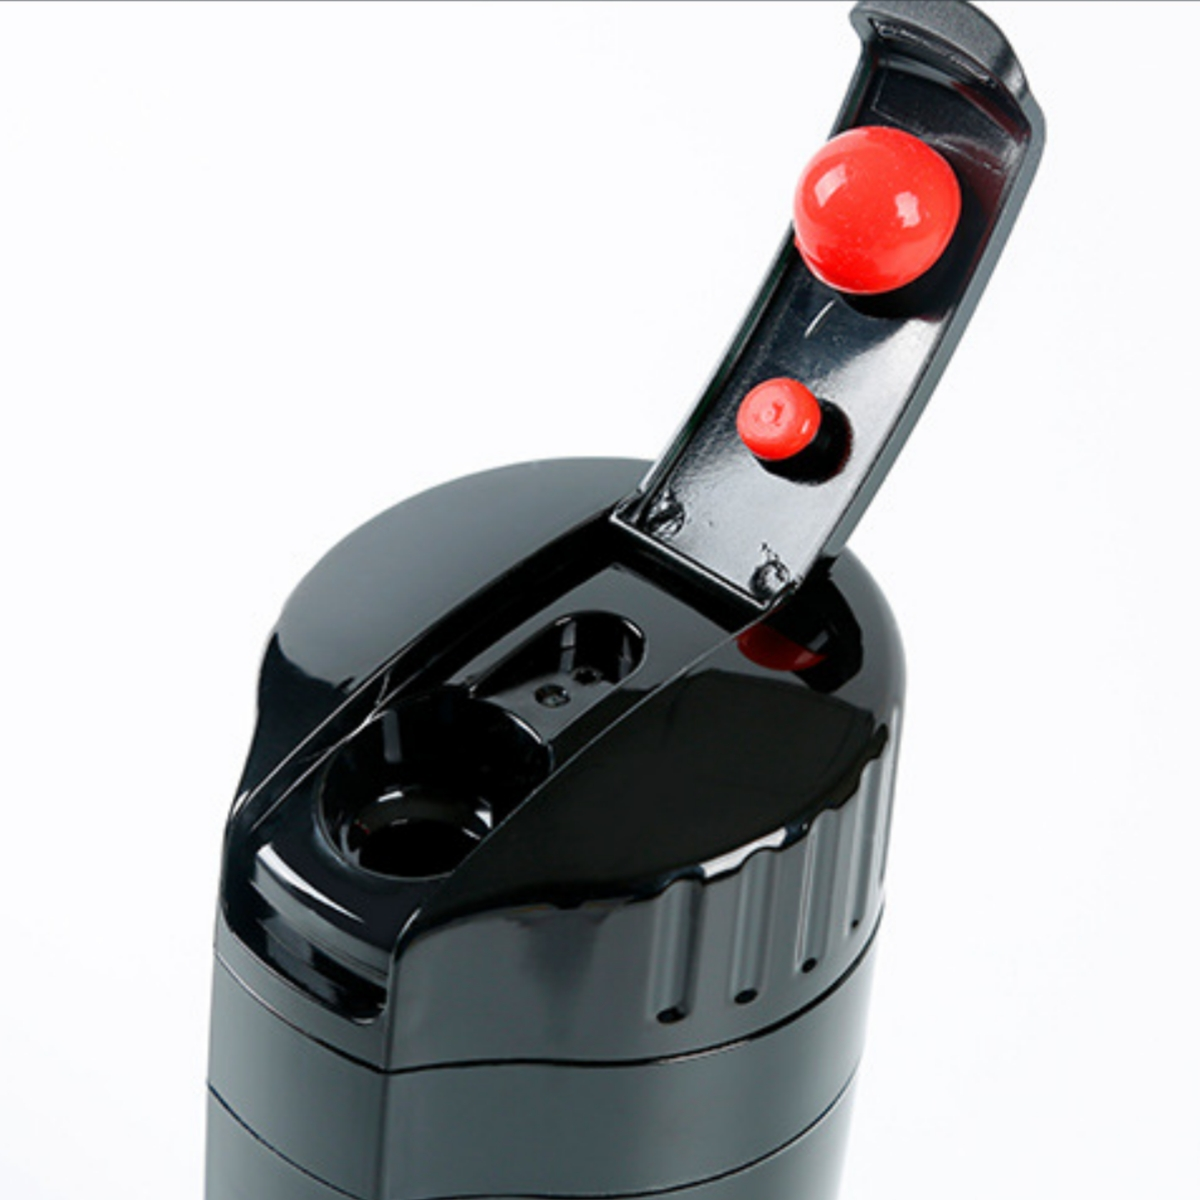 SHAOKE Wasserkocher Edelstahl 1 intelligente Anzeige Wasserkocher digitale elektrischer DIN Wassererhitzer Heizung aus